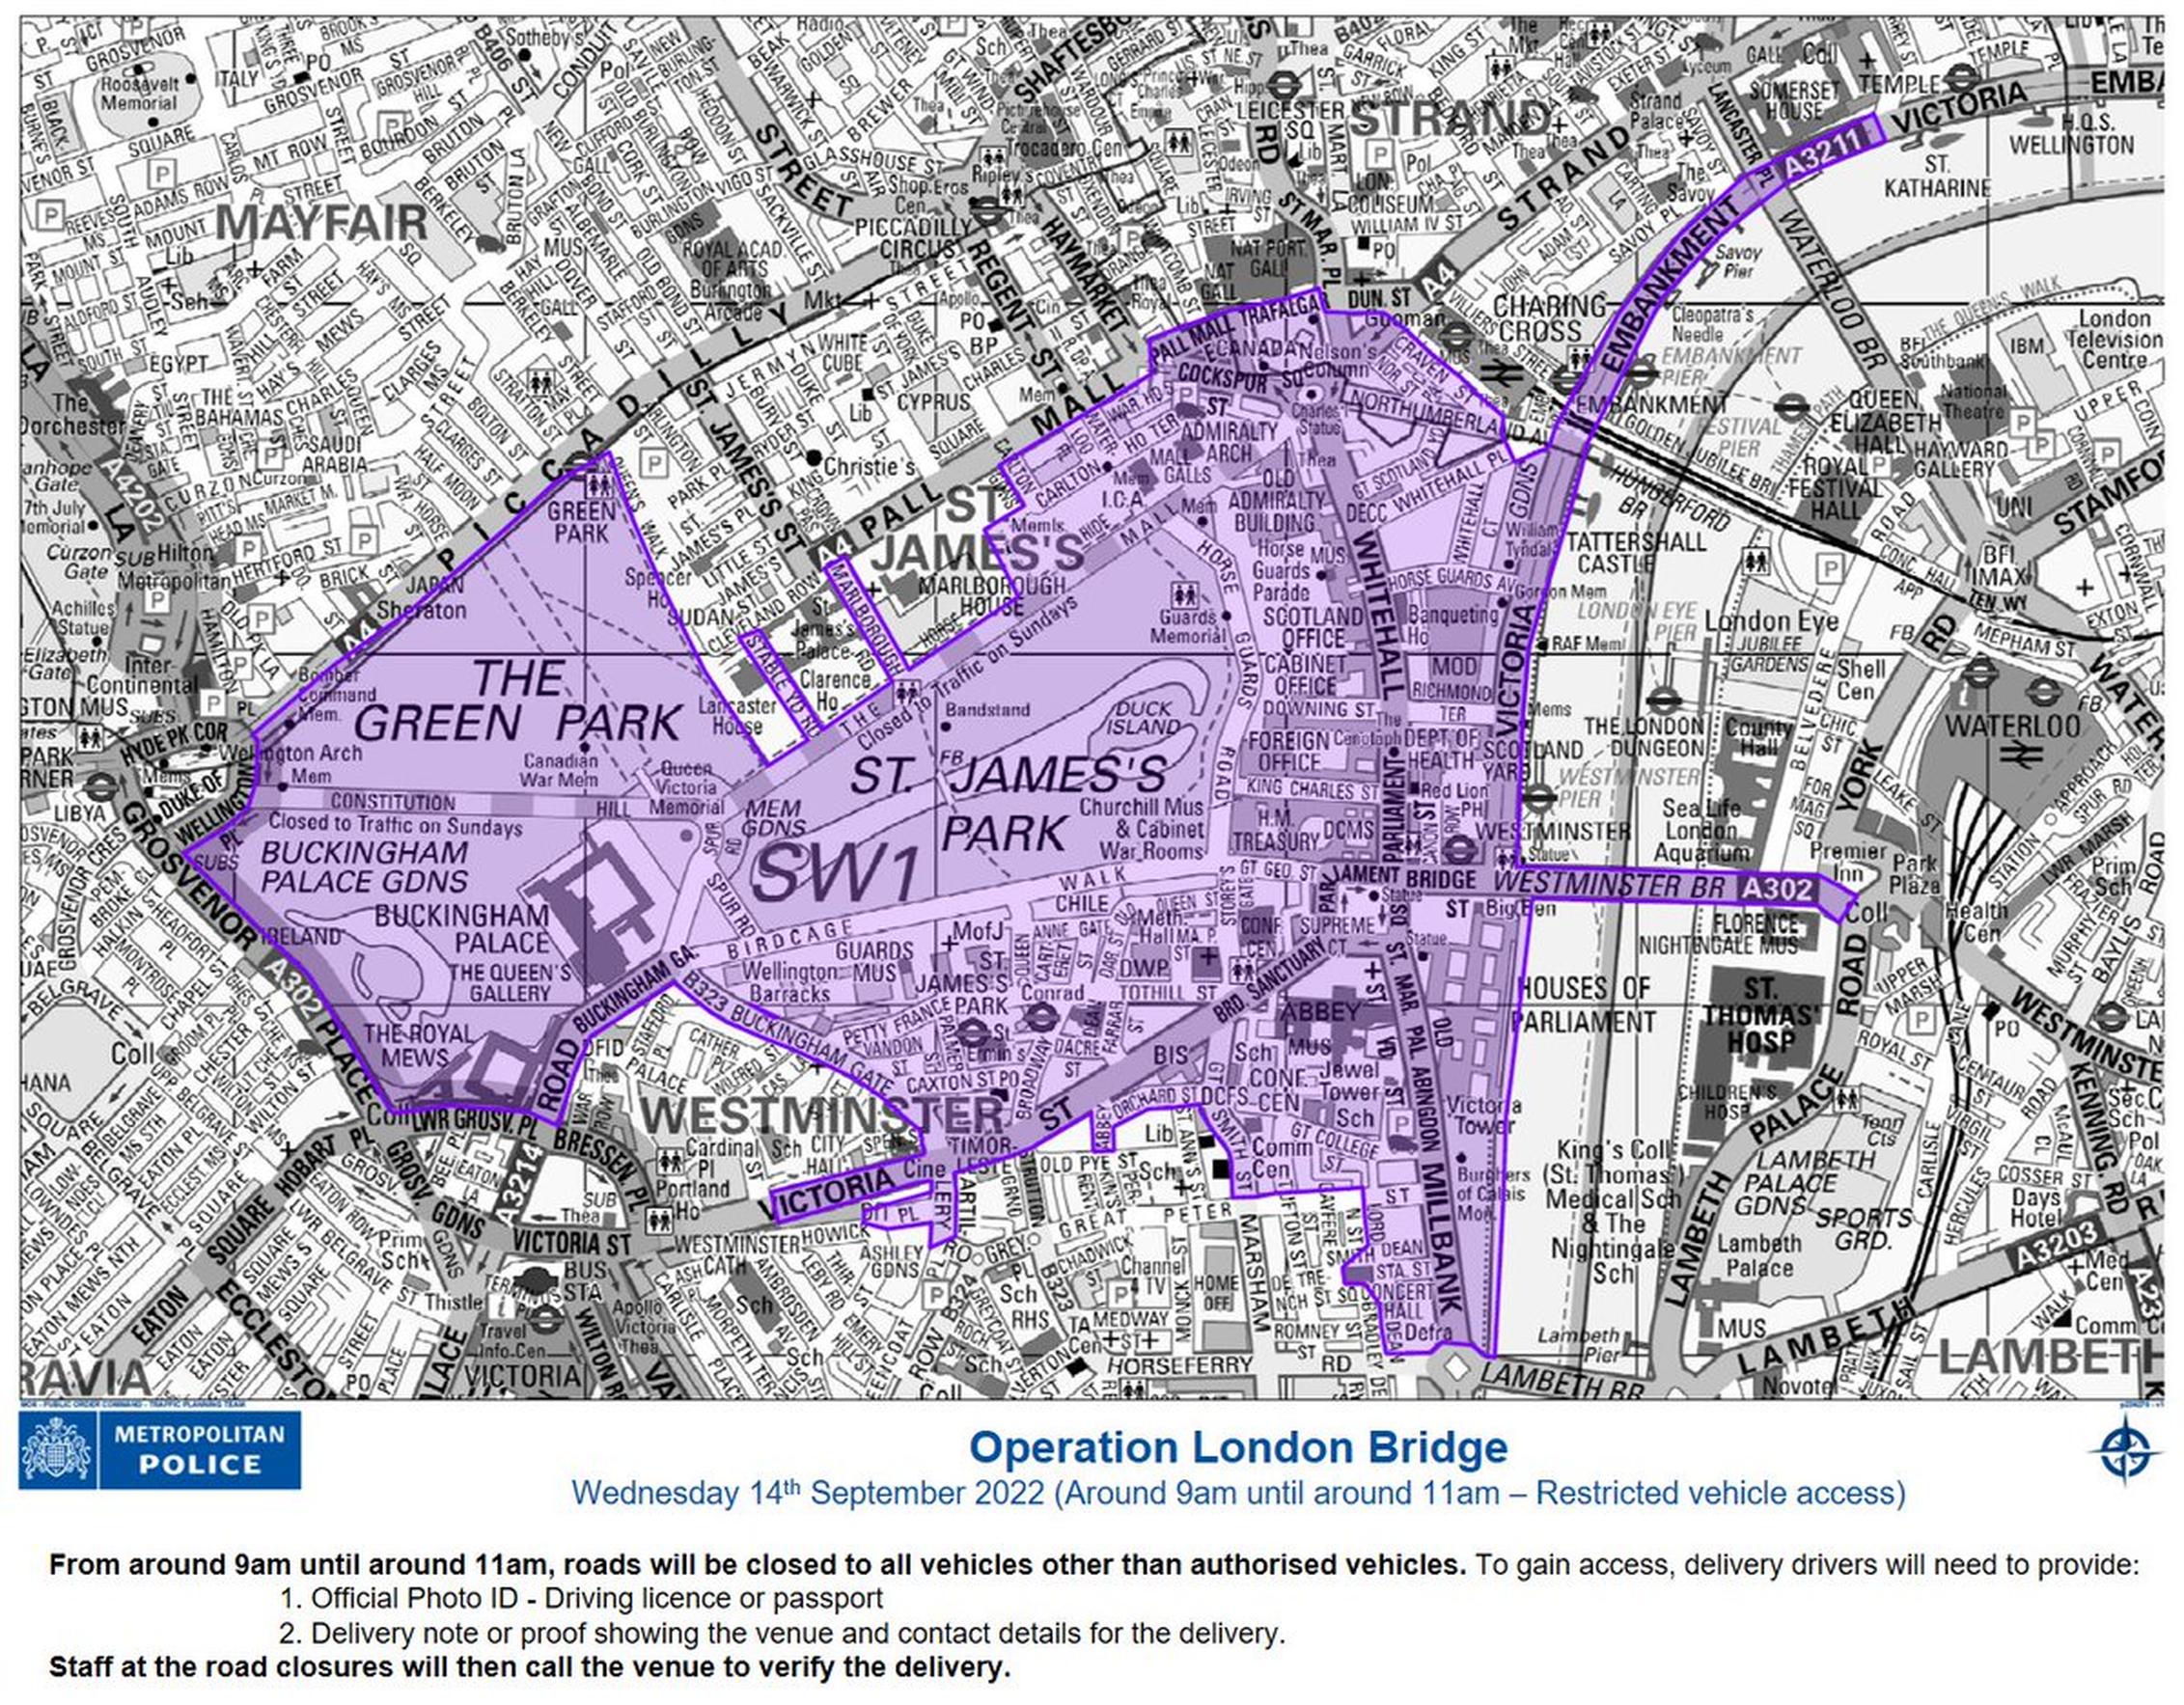 A map of roads closed under Operation London Bridge